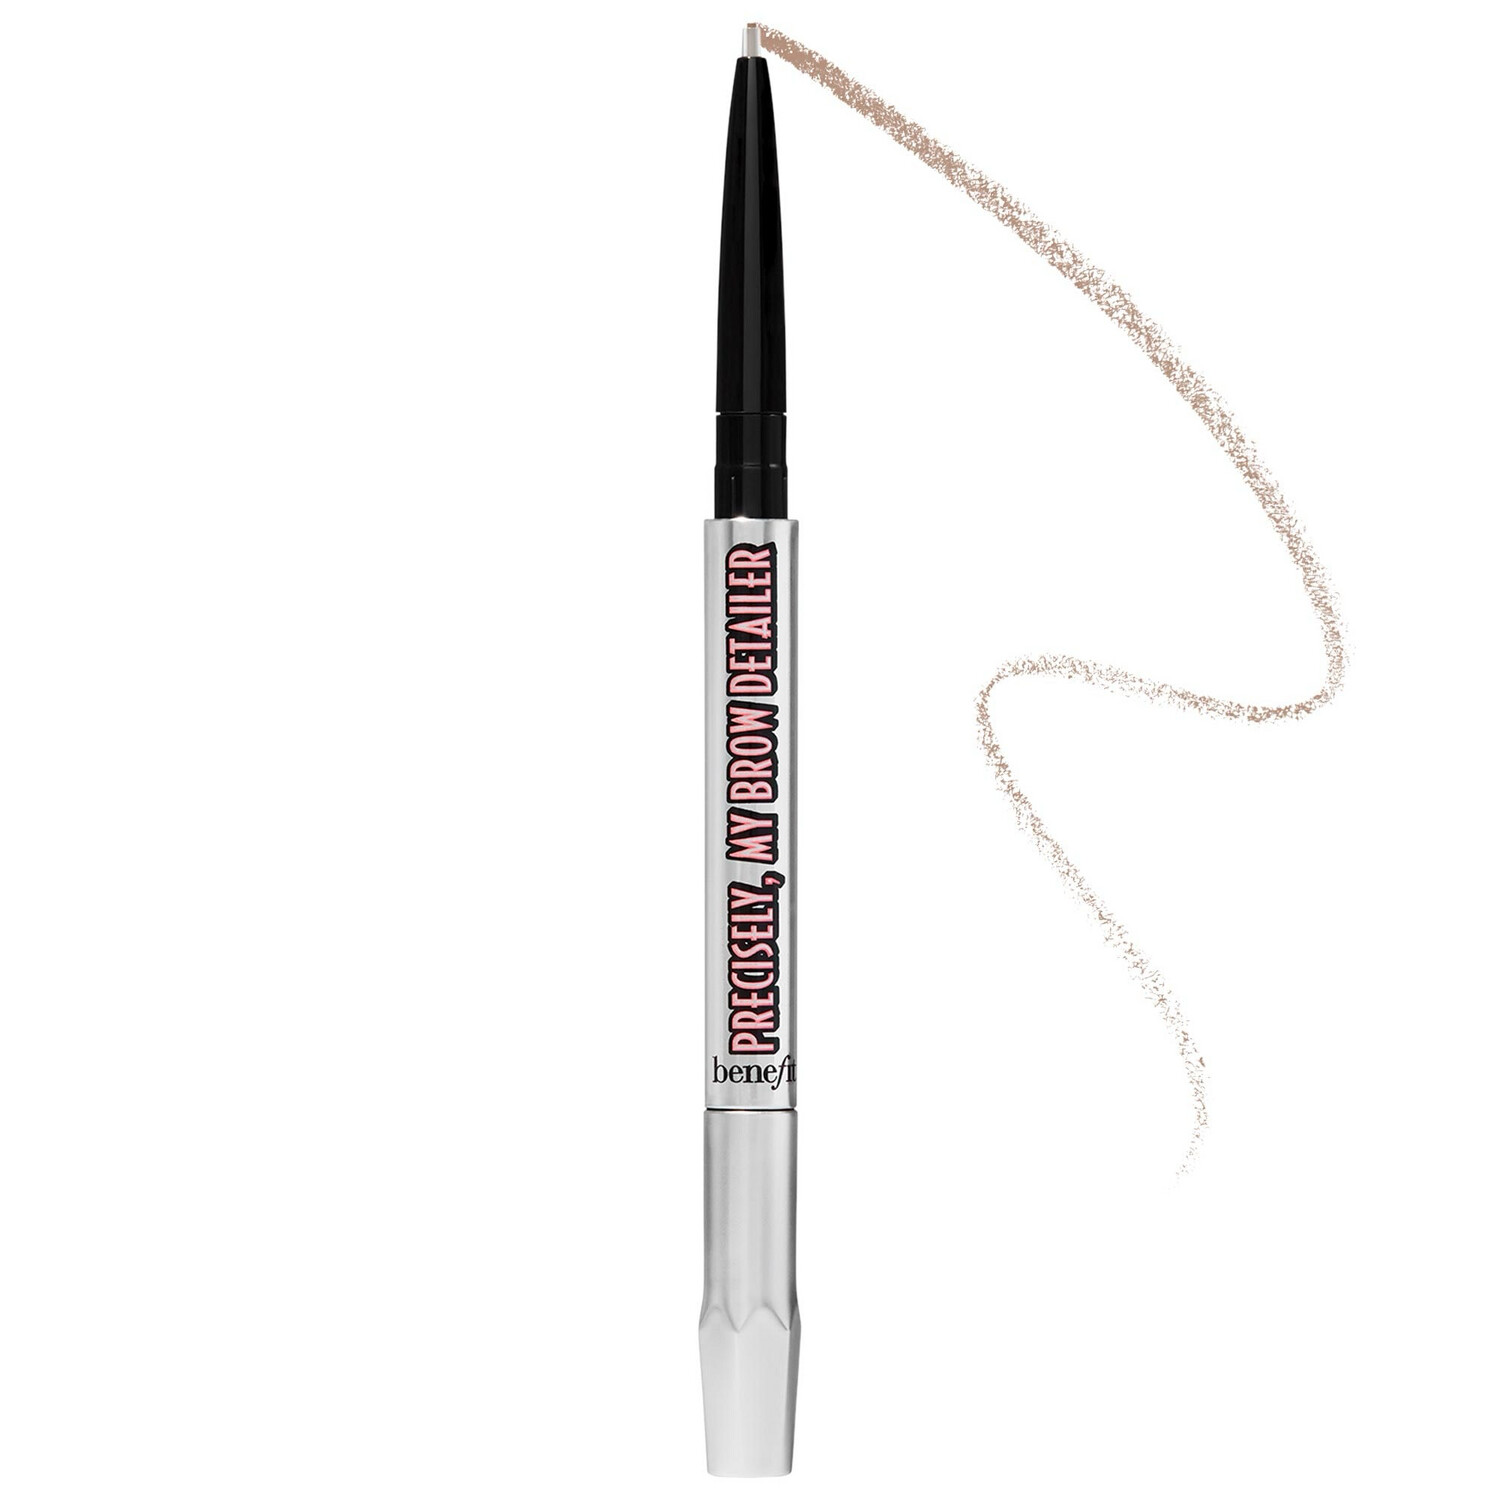 Benefit Cosmetics - Precisely, My Brow Detailer Microfine Waterproof Eyebrow Pencil | shade 2.5